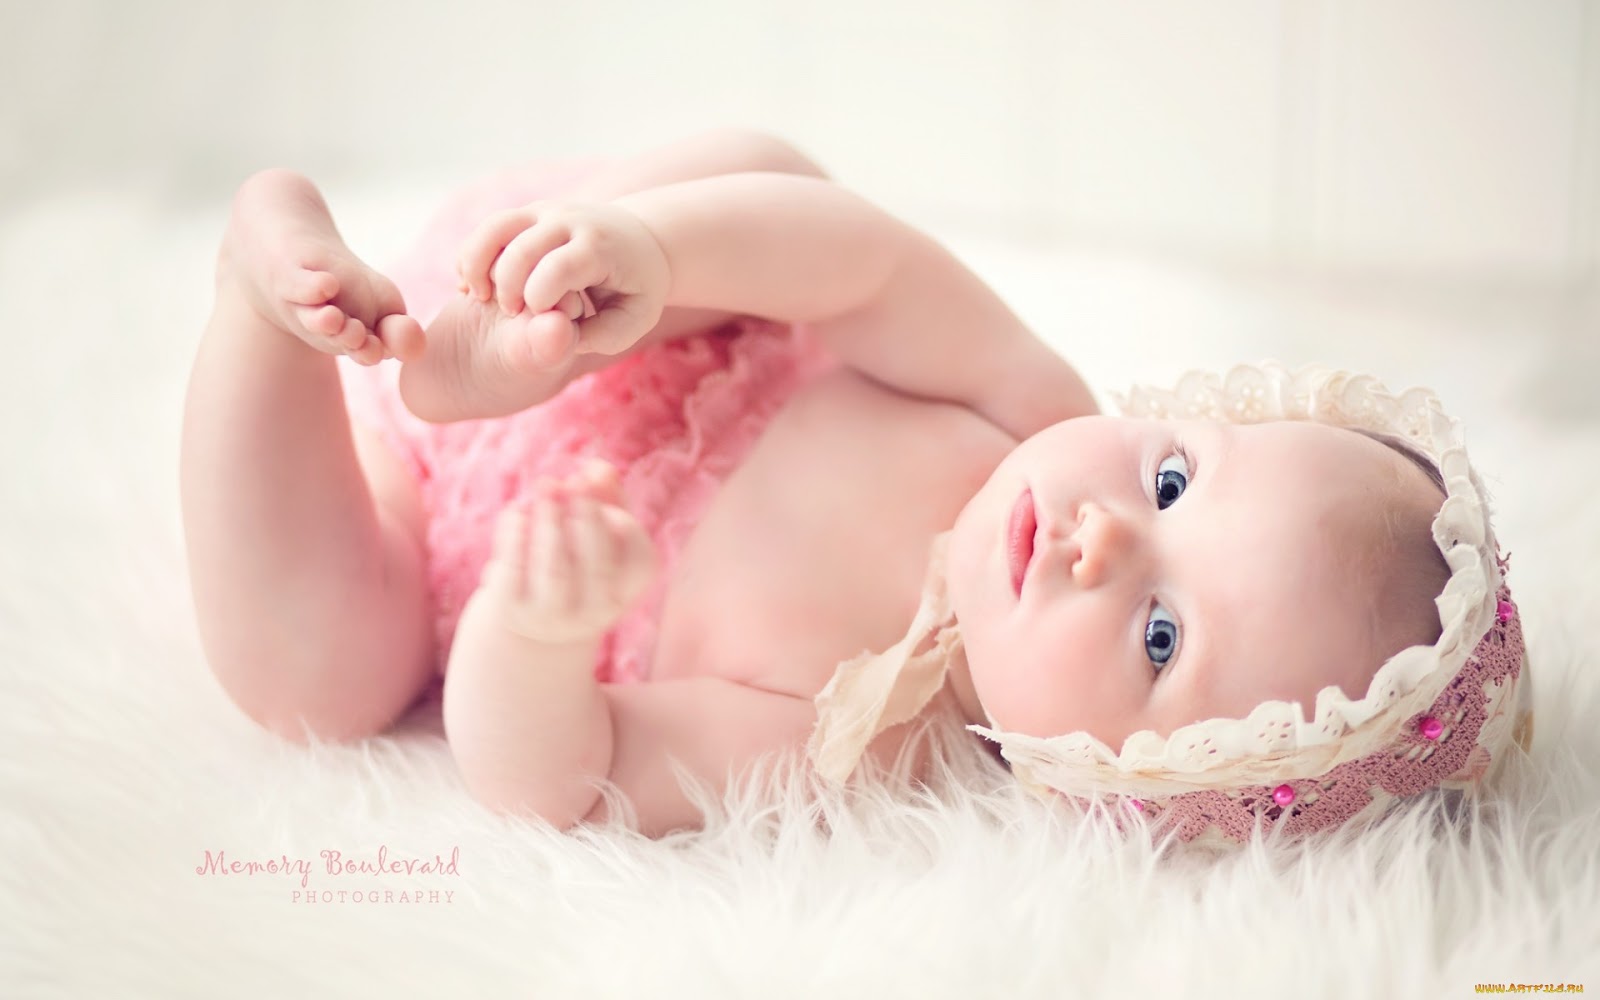 Cute Baby HD Wallpaper Of Girl Image S